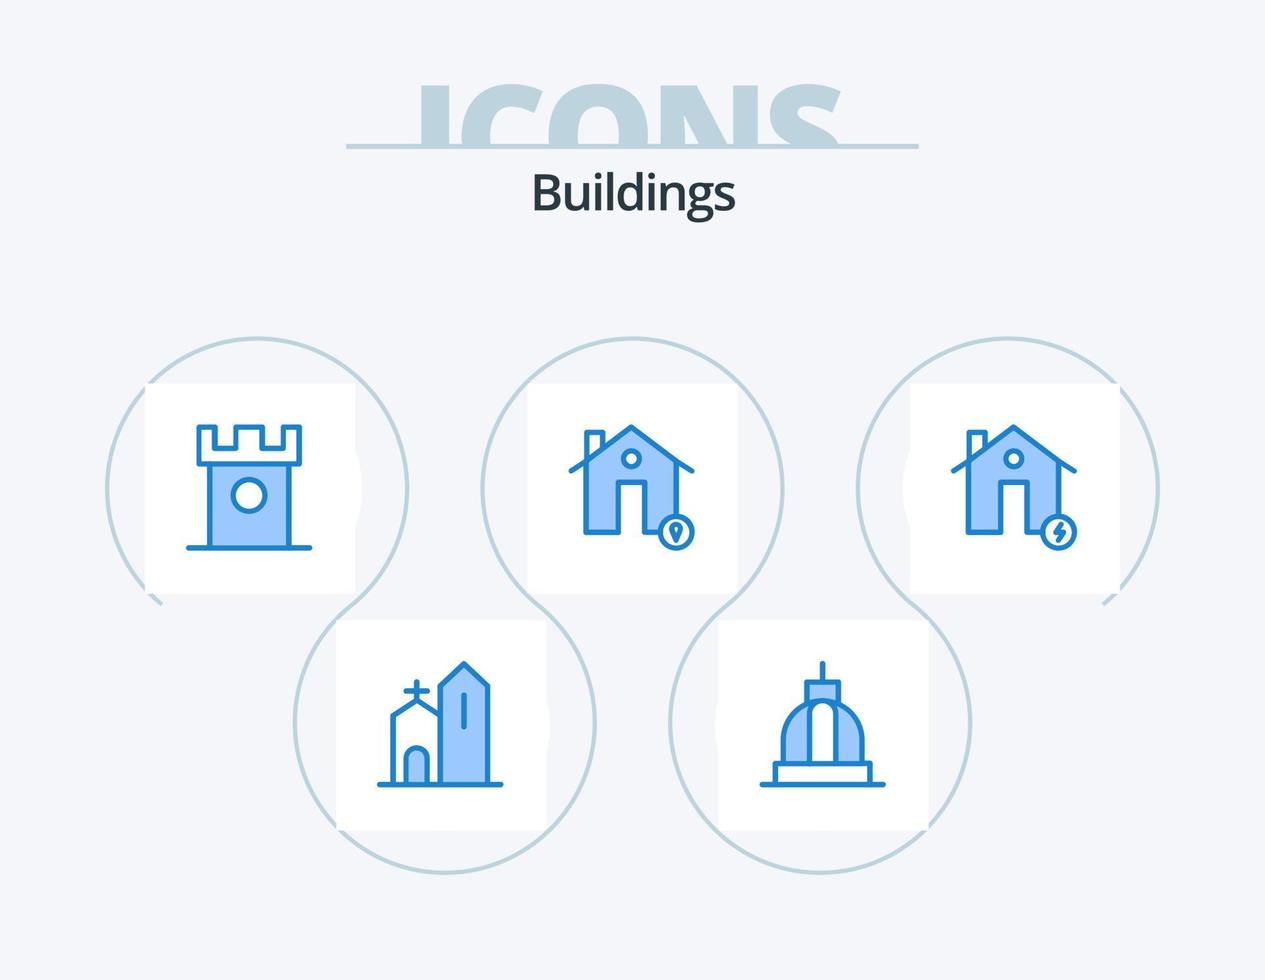 edificios icono azul paquete 5 diseño de iconos. casa. edificios Capitolio. histórico. postre vector